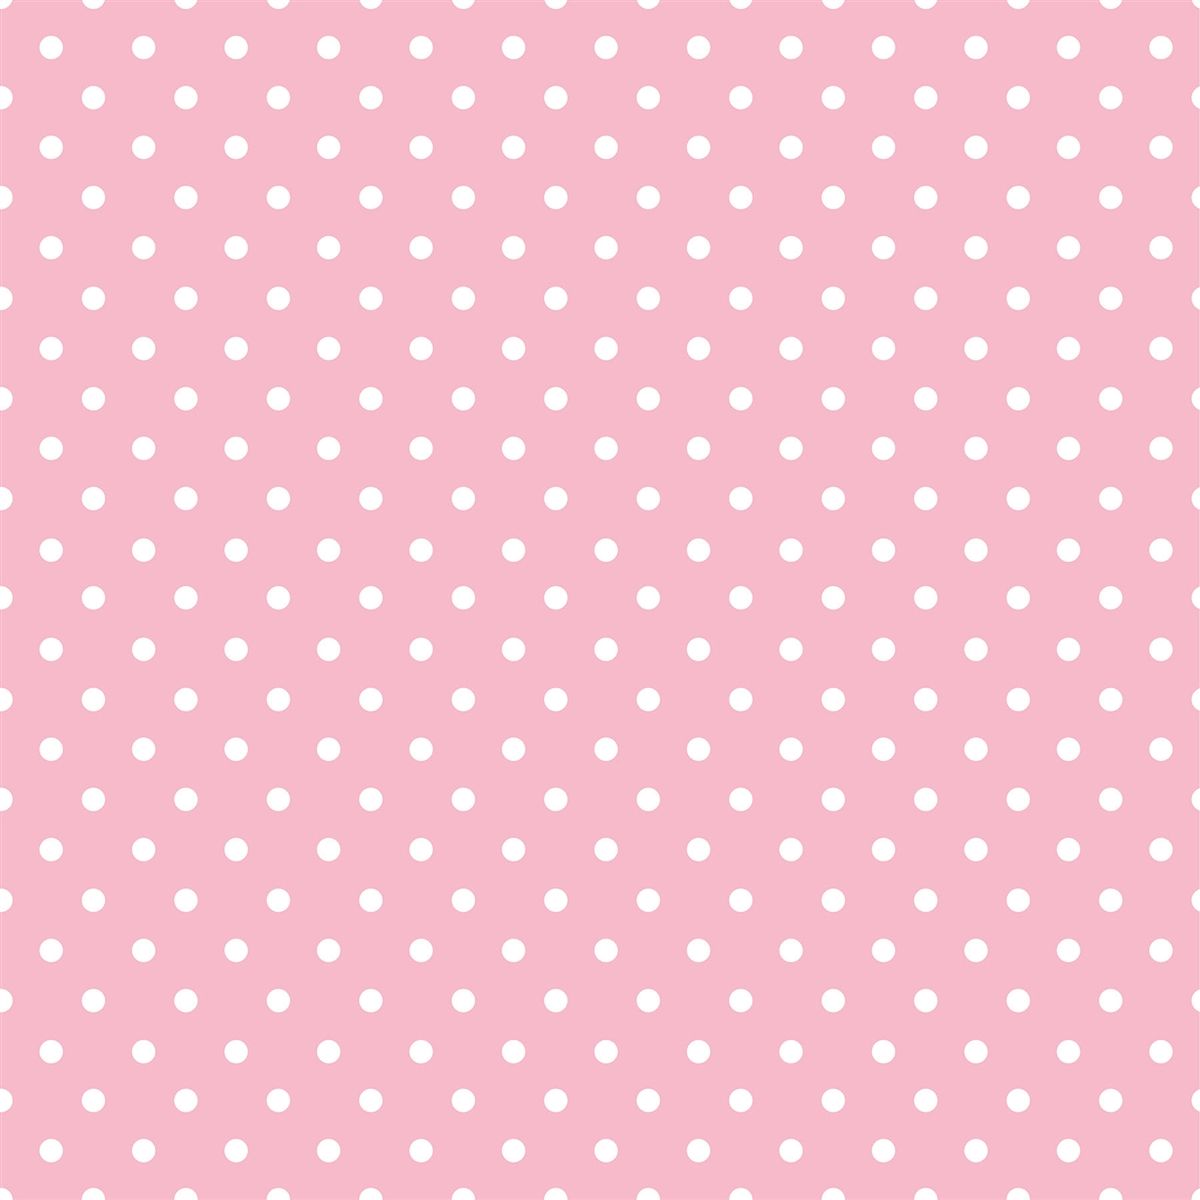 Pink and White Polka Dot Wallpaper Free Pink and White Polka Dot Background